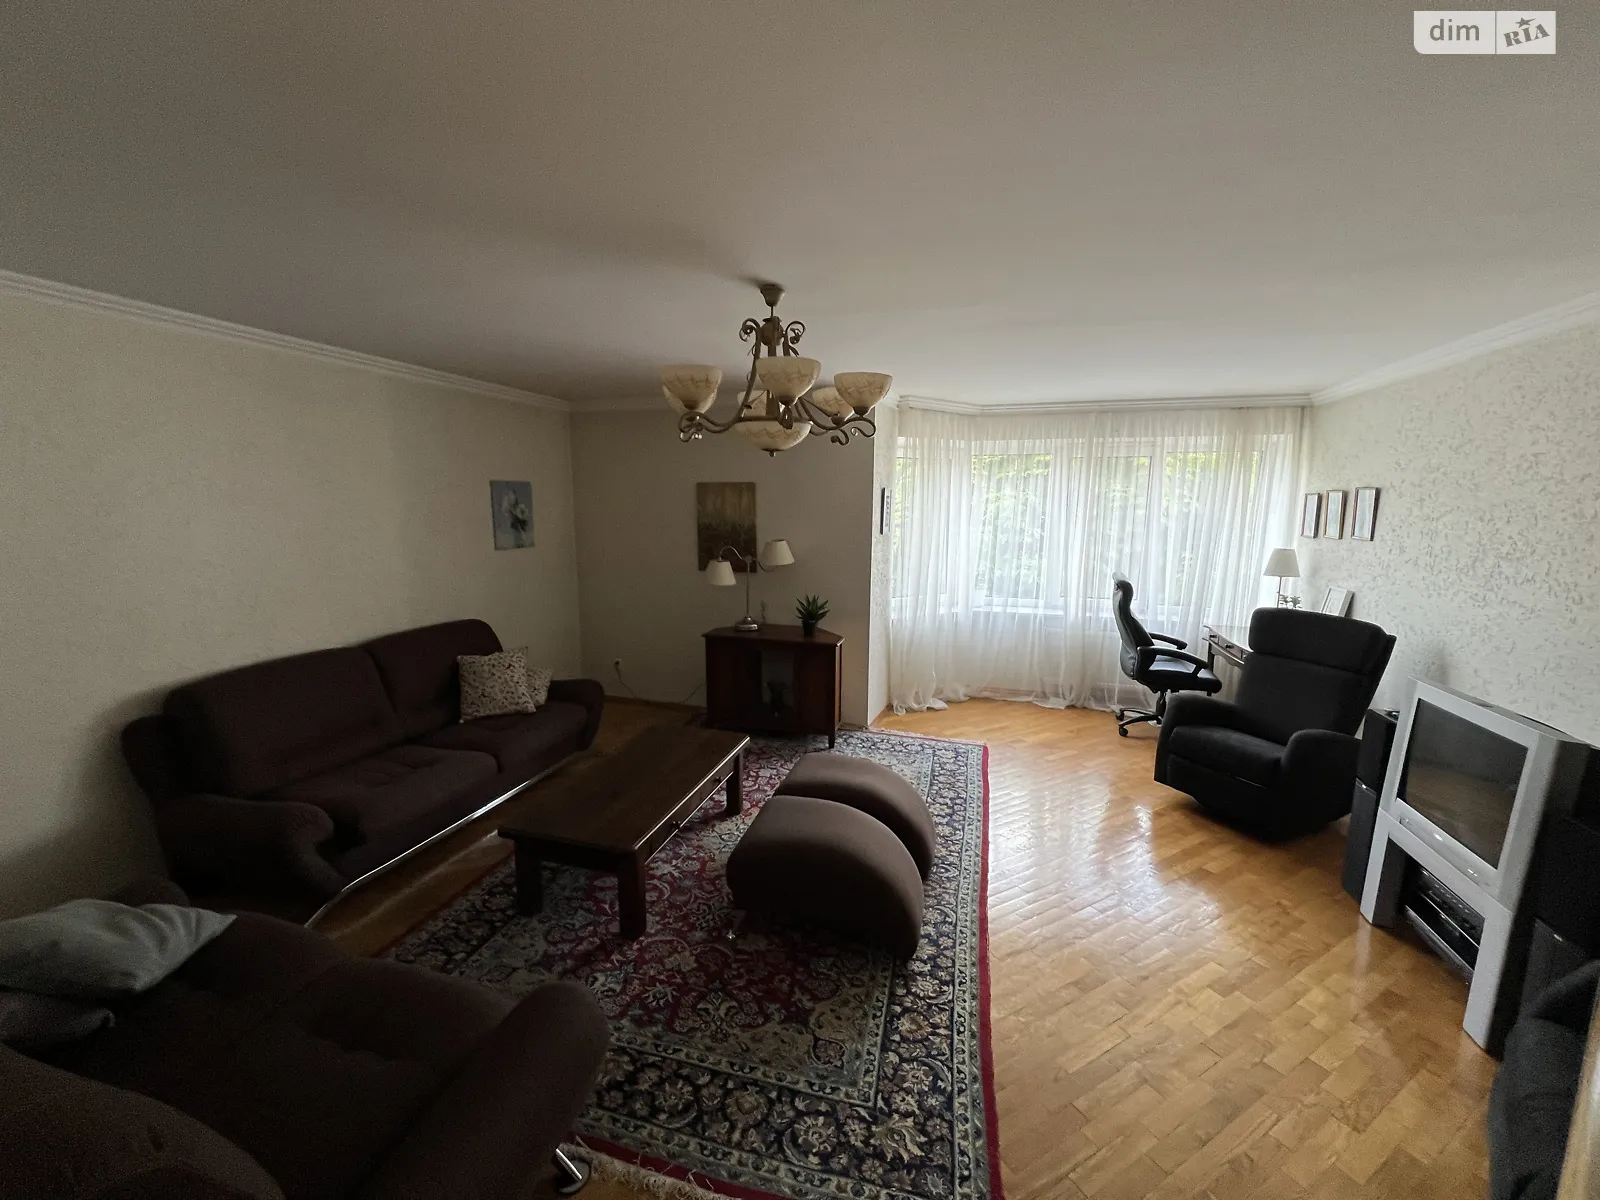 3-кімнатна квартира 110 кв. м у Луцьку, цена: 800 $ - фото 1